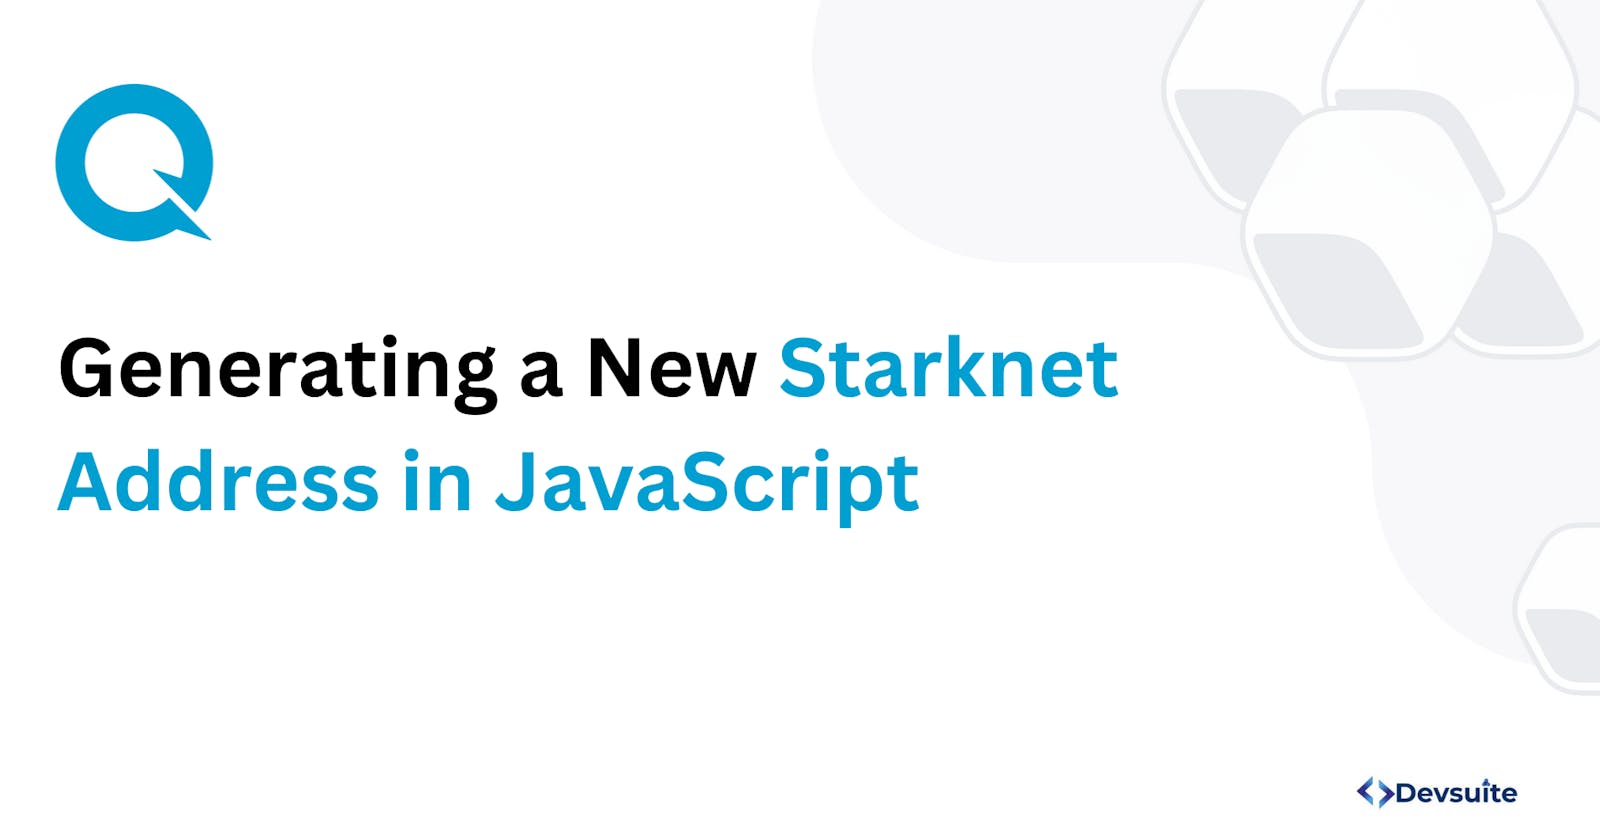 Generating a New Starknet Address in JavaScript